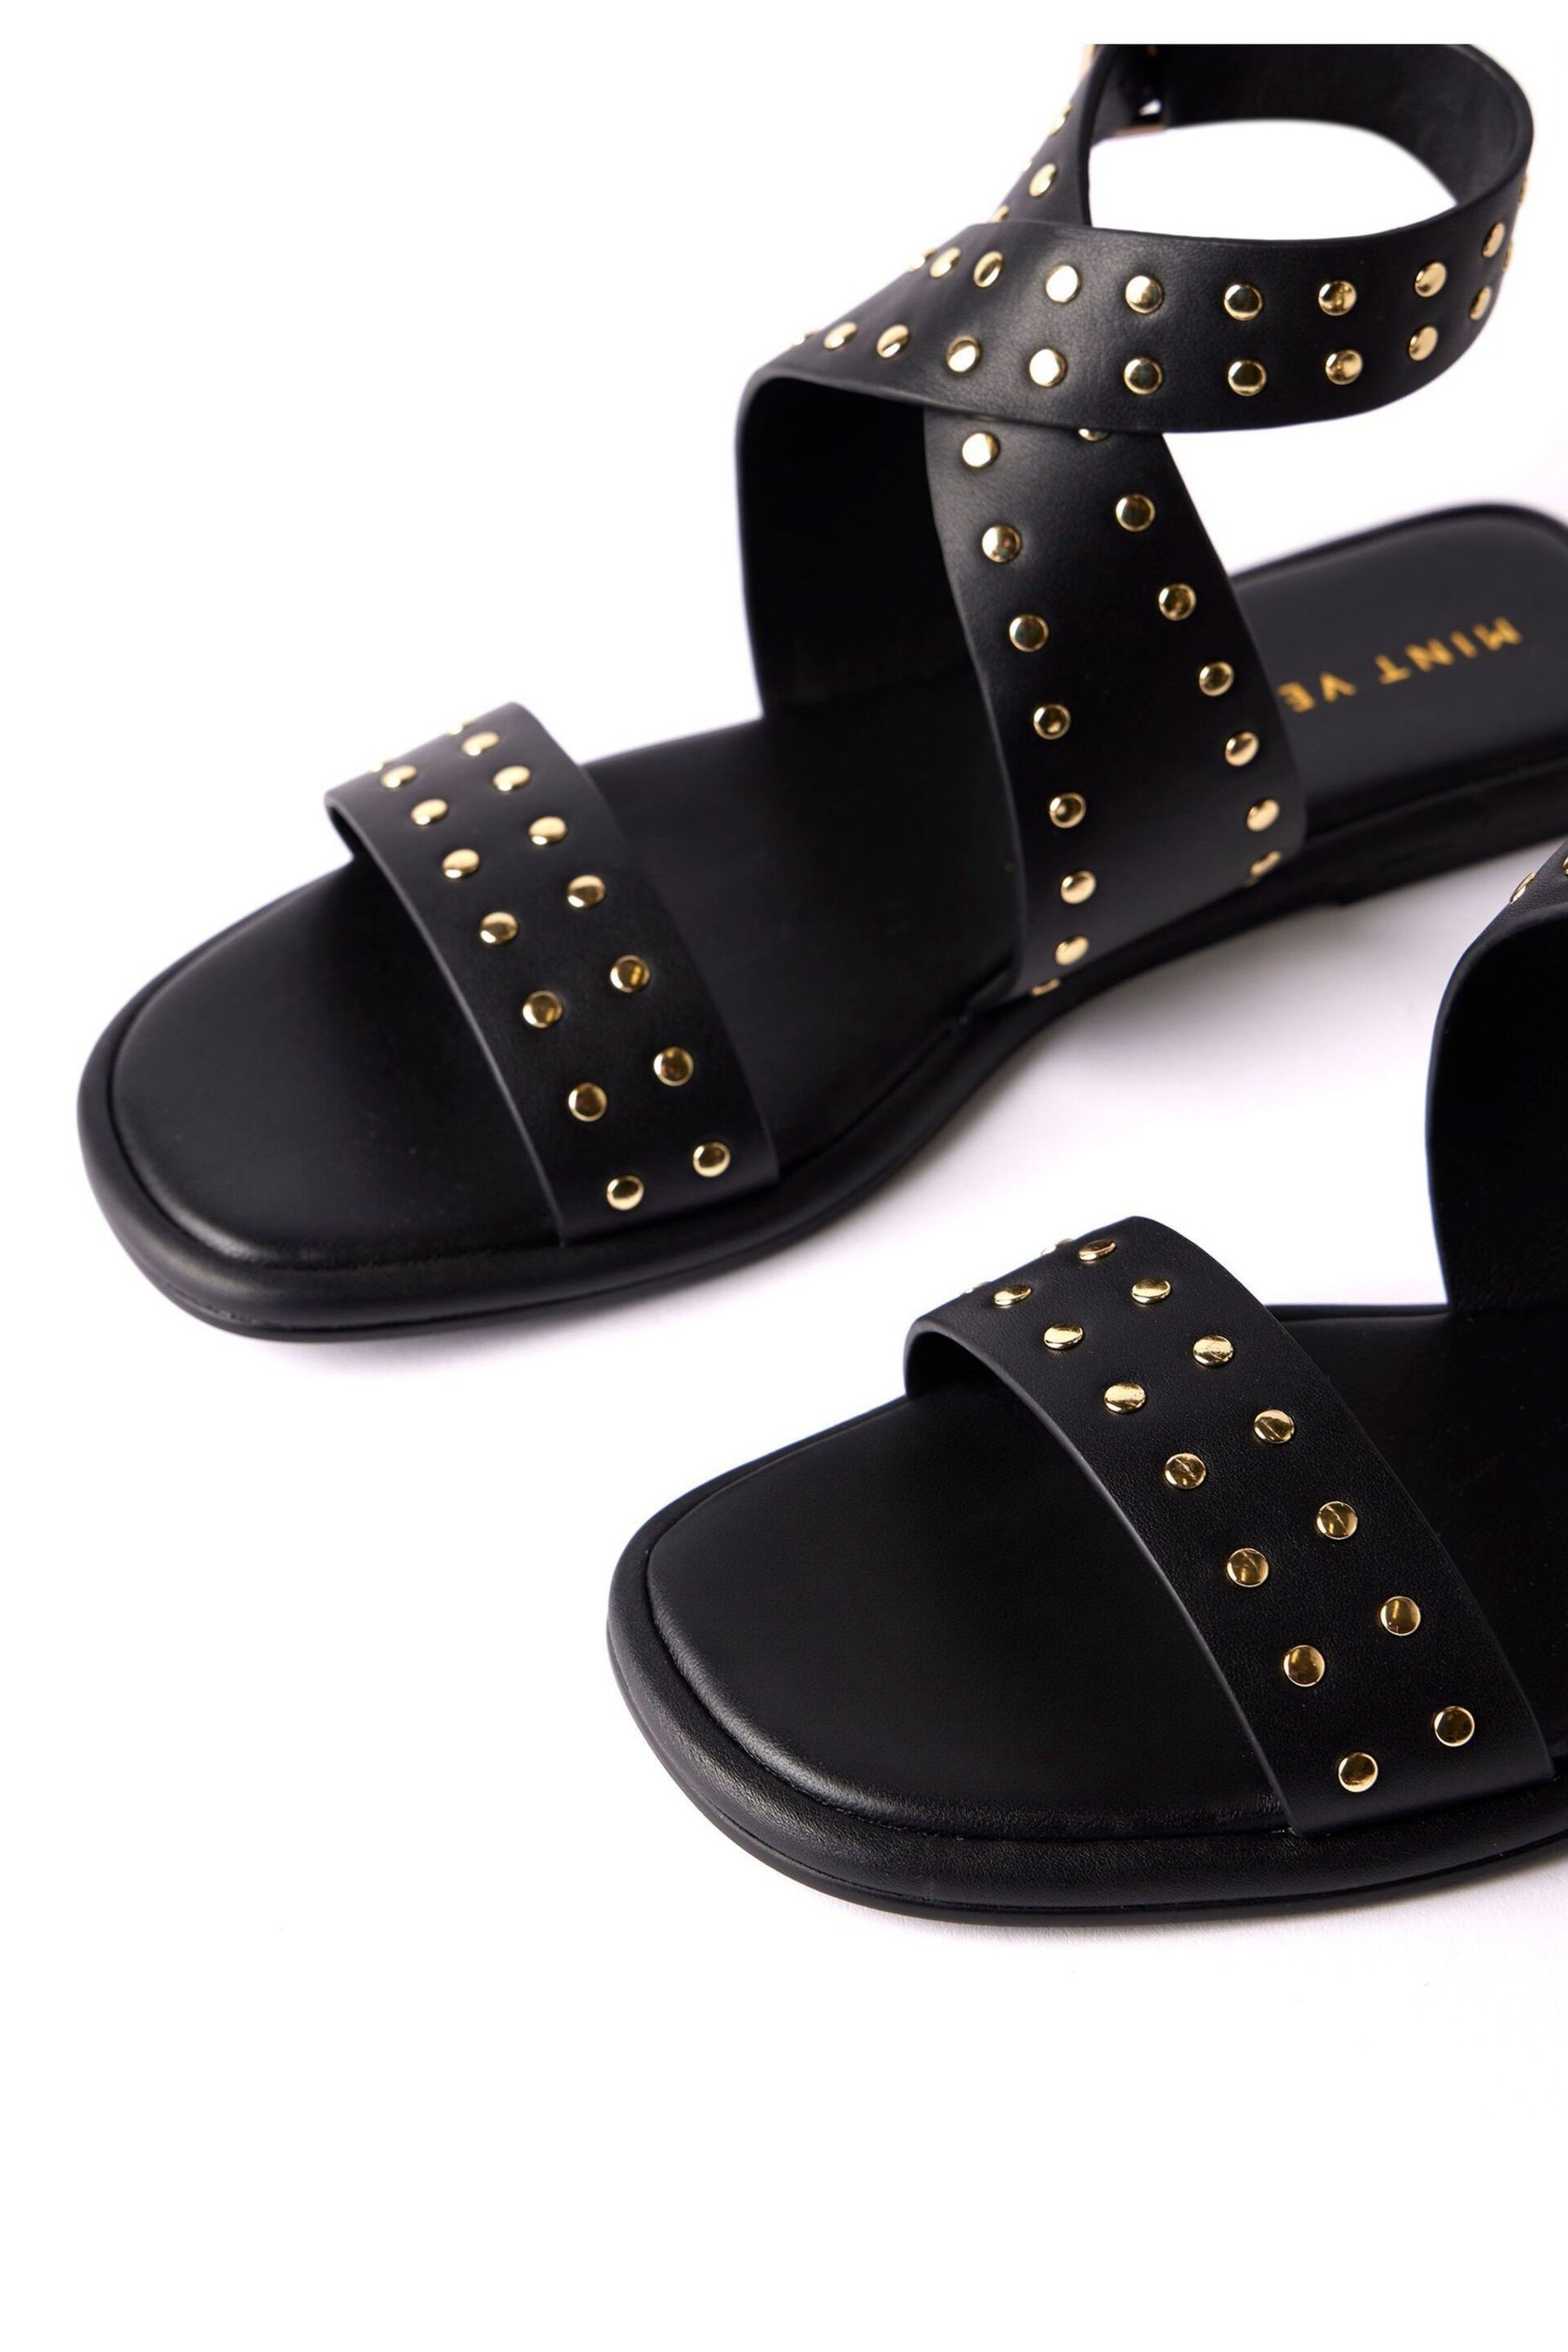 Mint Velvet Black Black Leather Stud Sandals - Image 4 of 5